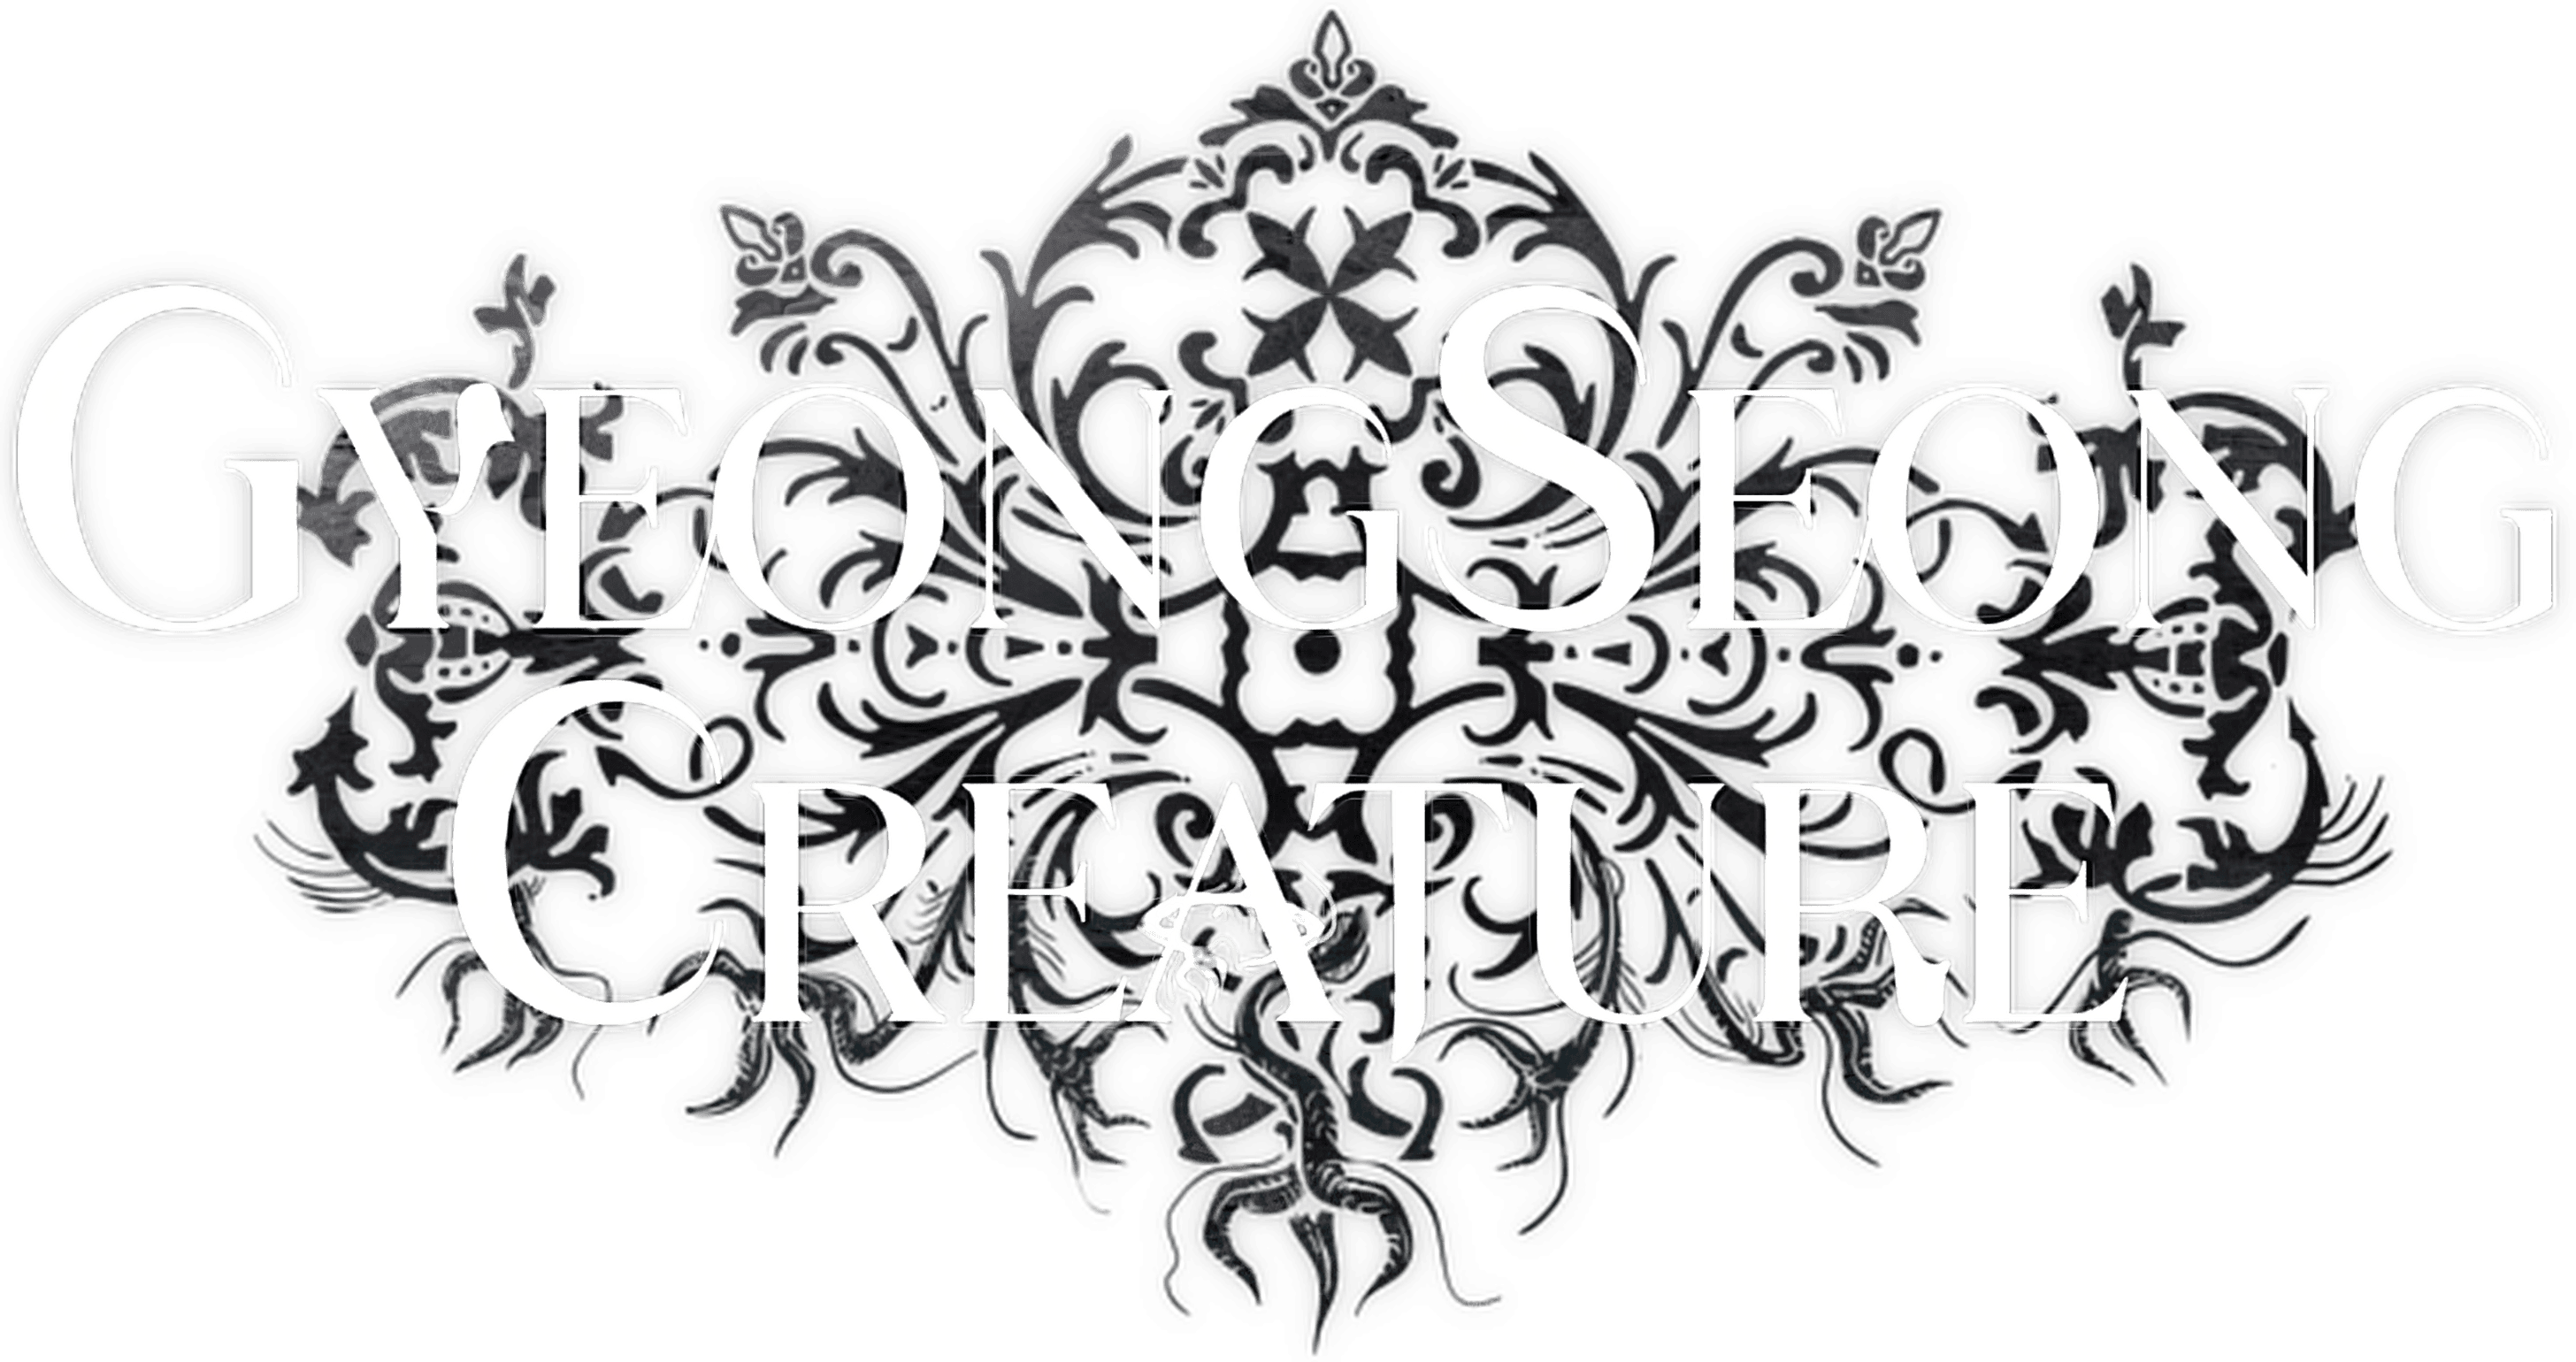 Gyeongseong Creature logo